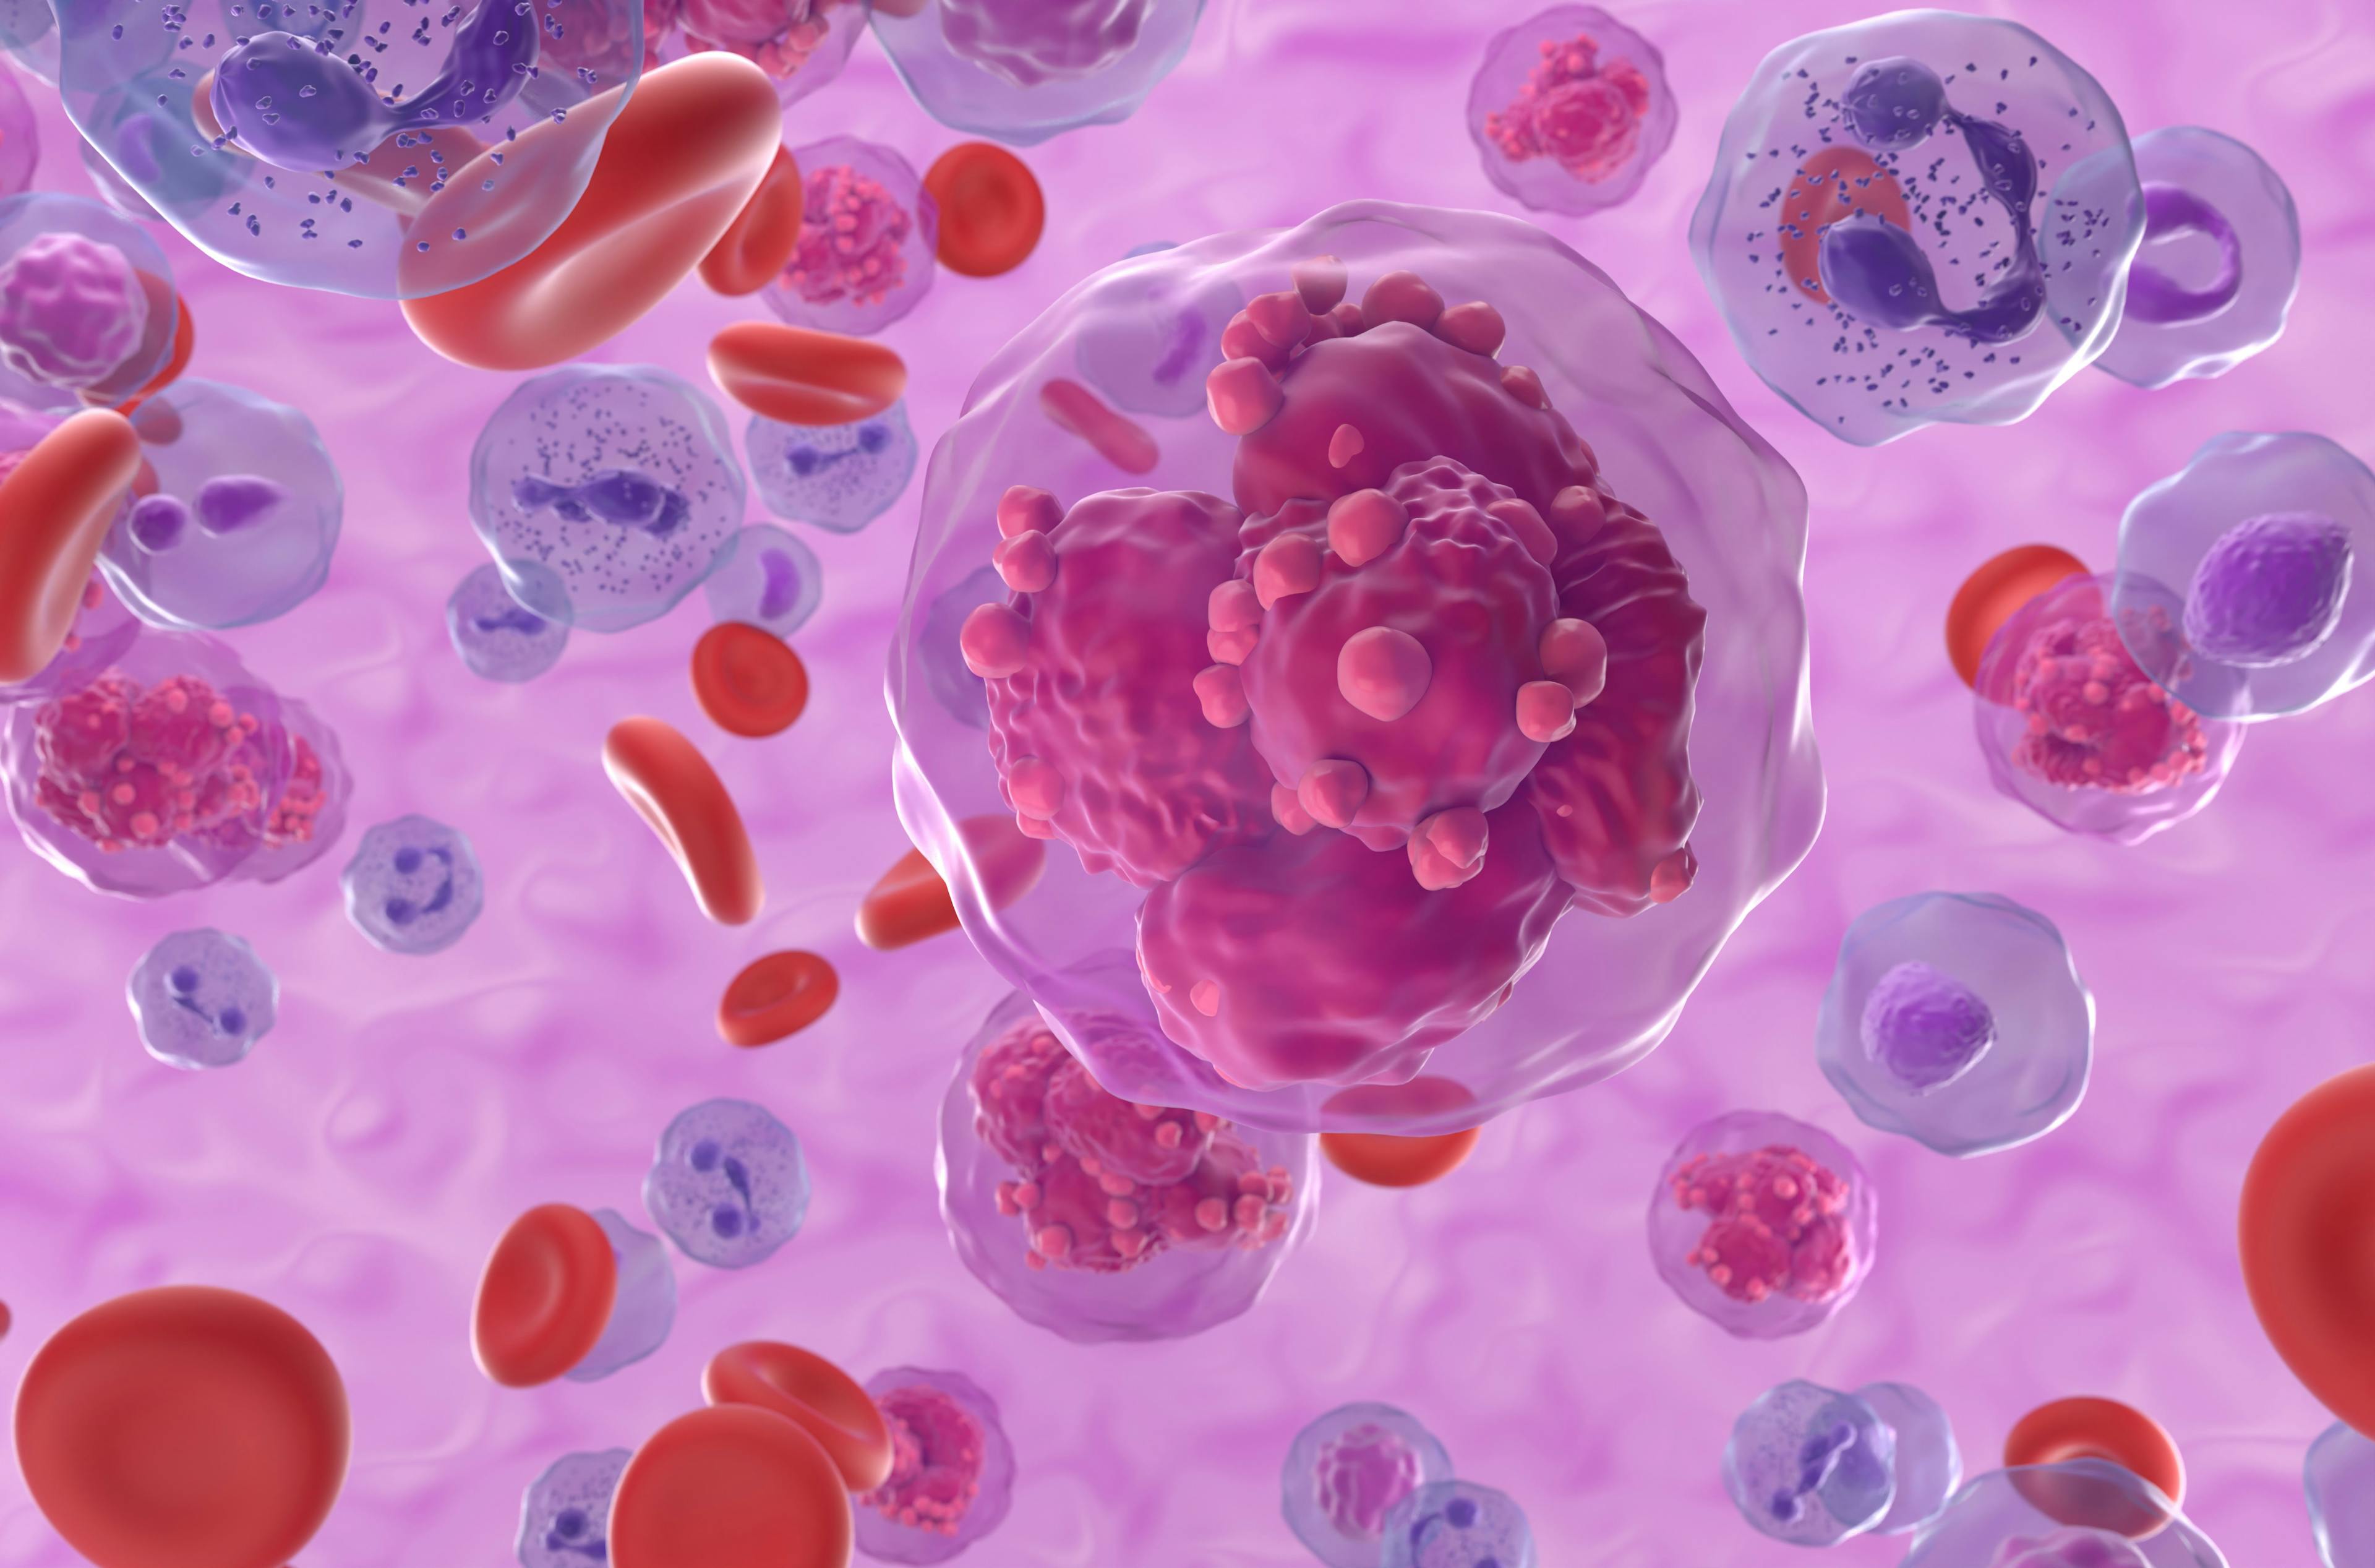 Acute myeloid leukemia (AML) cells in blood flow - isometric view, 3D illustration: © LASZLO - stock.adobe.com